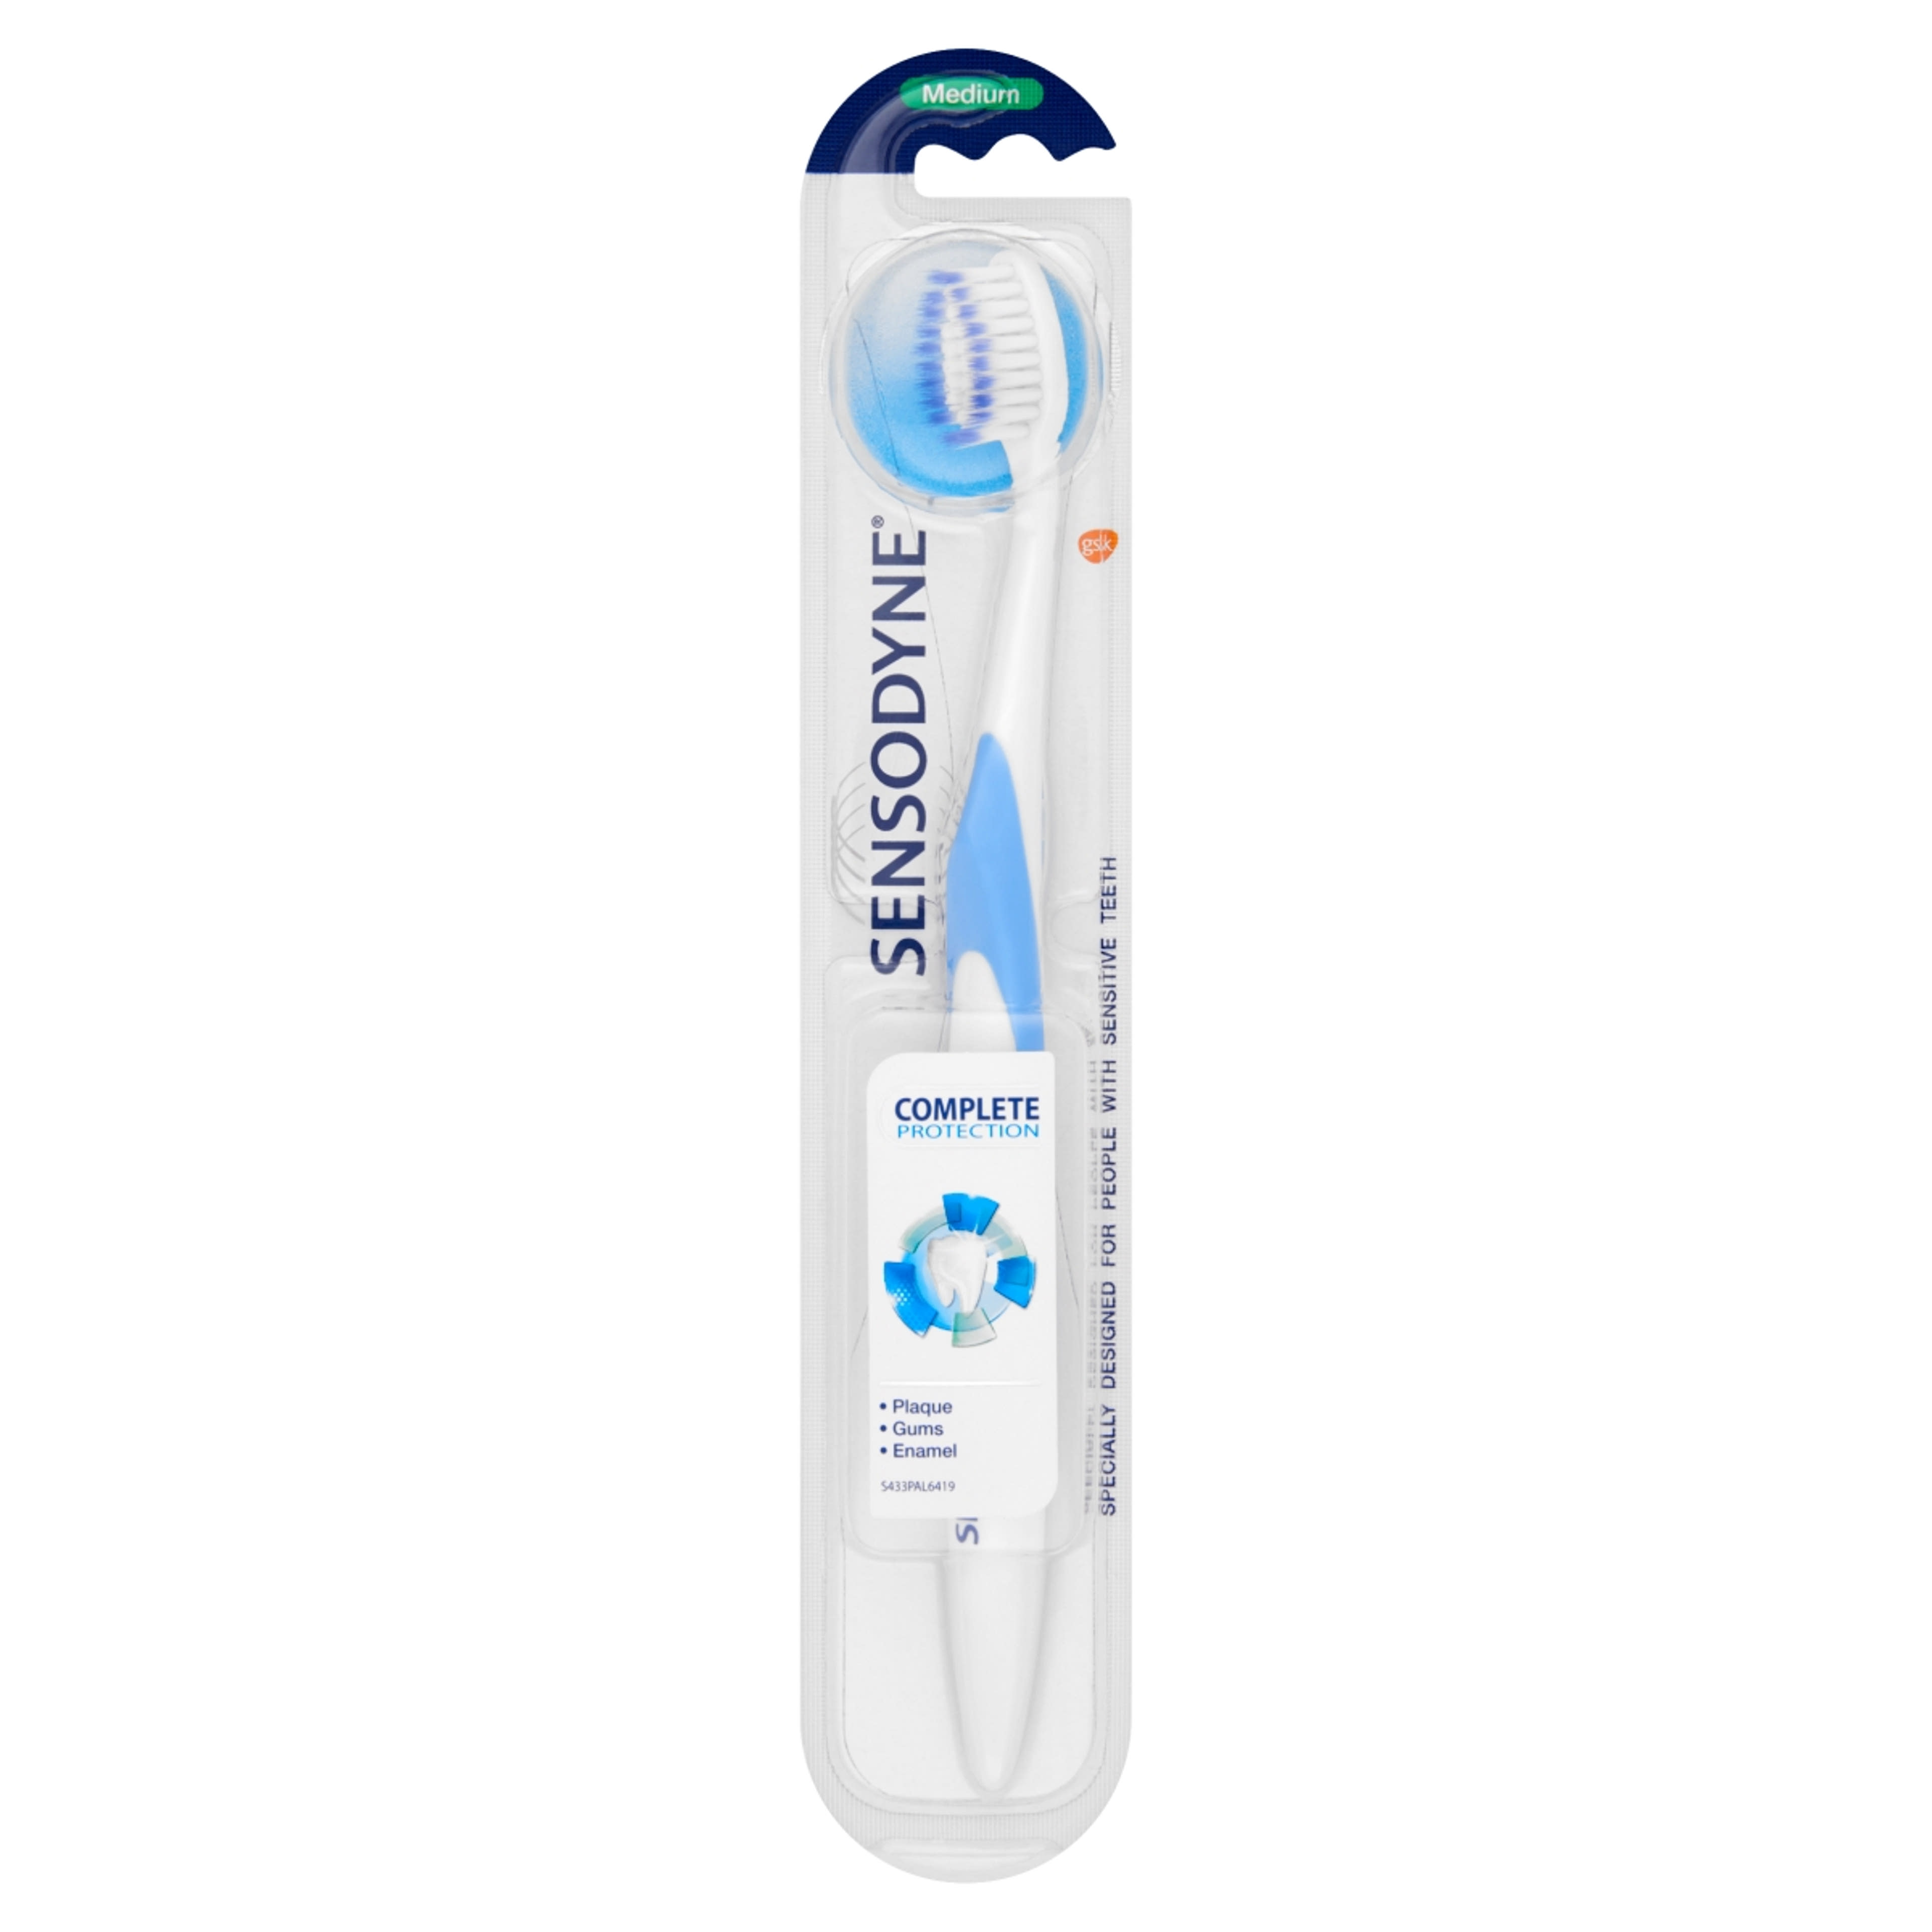 Sensodyne Complete Protection Medium fogkefe - 1 db